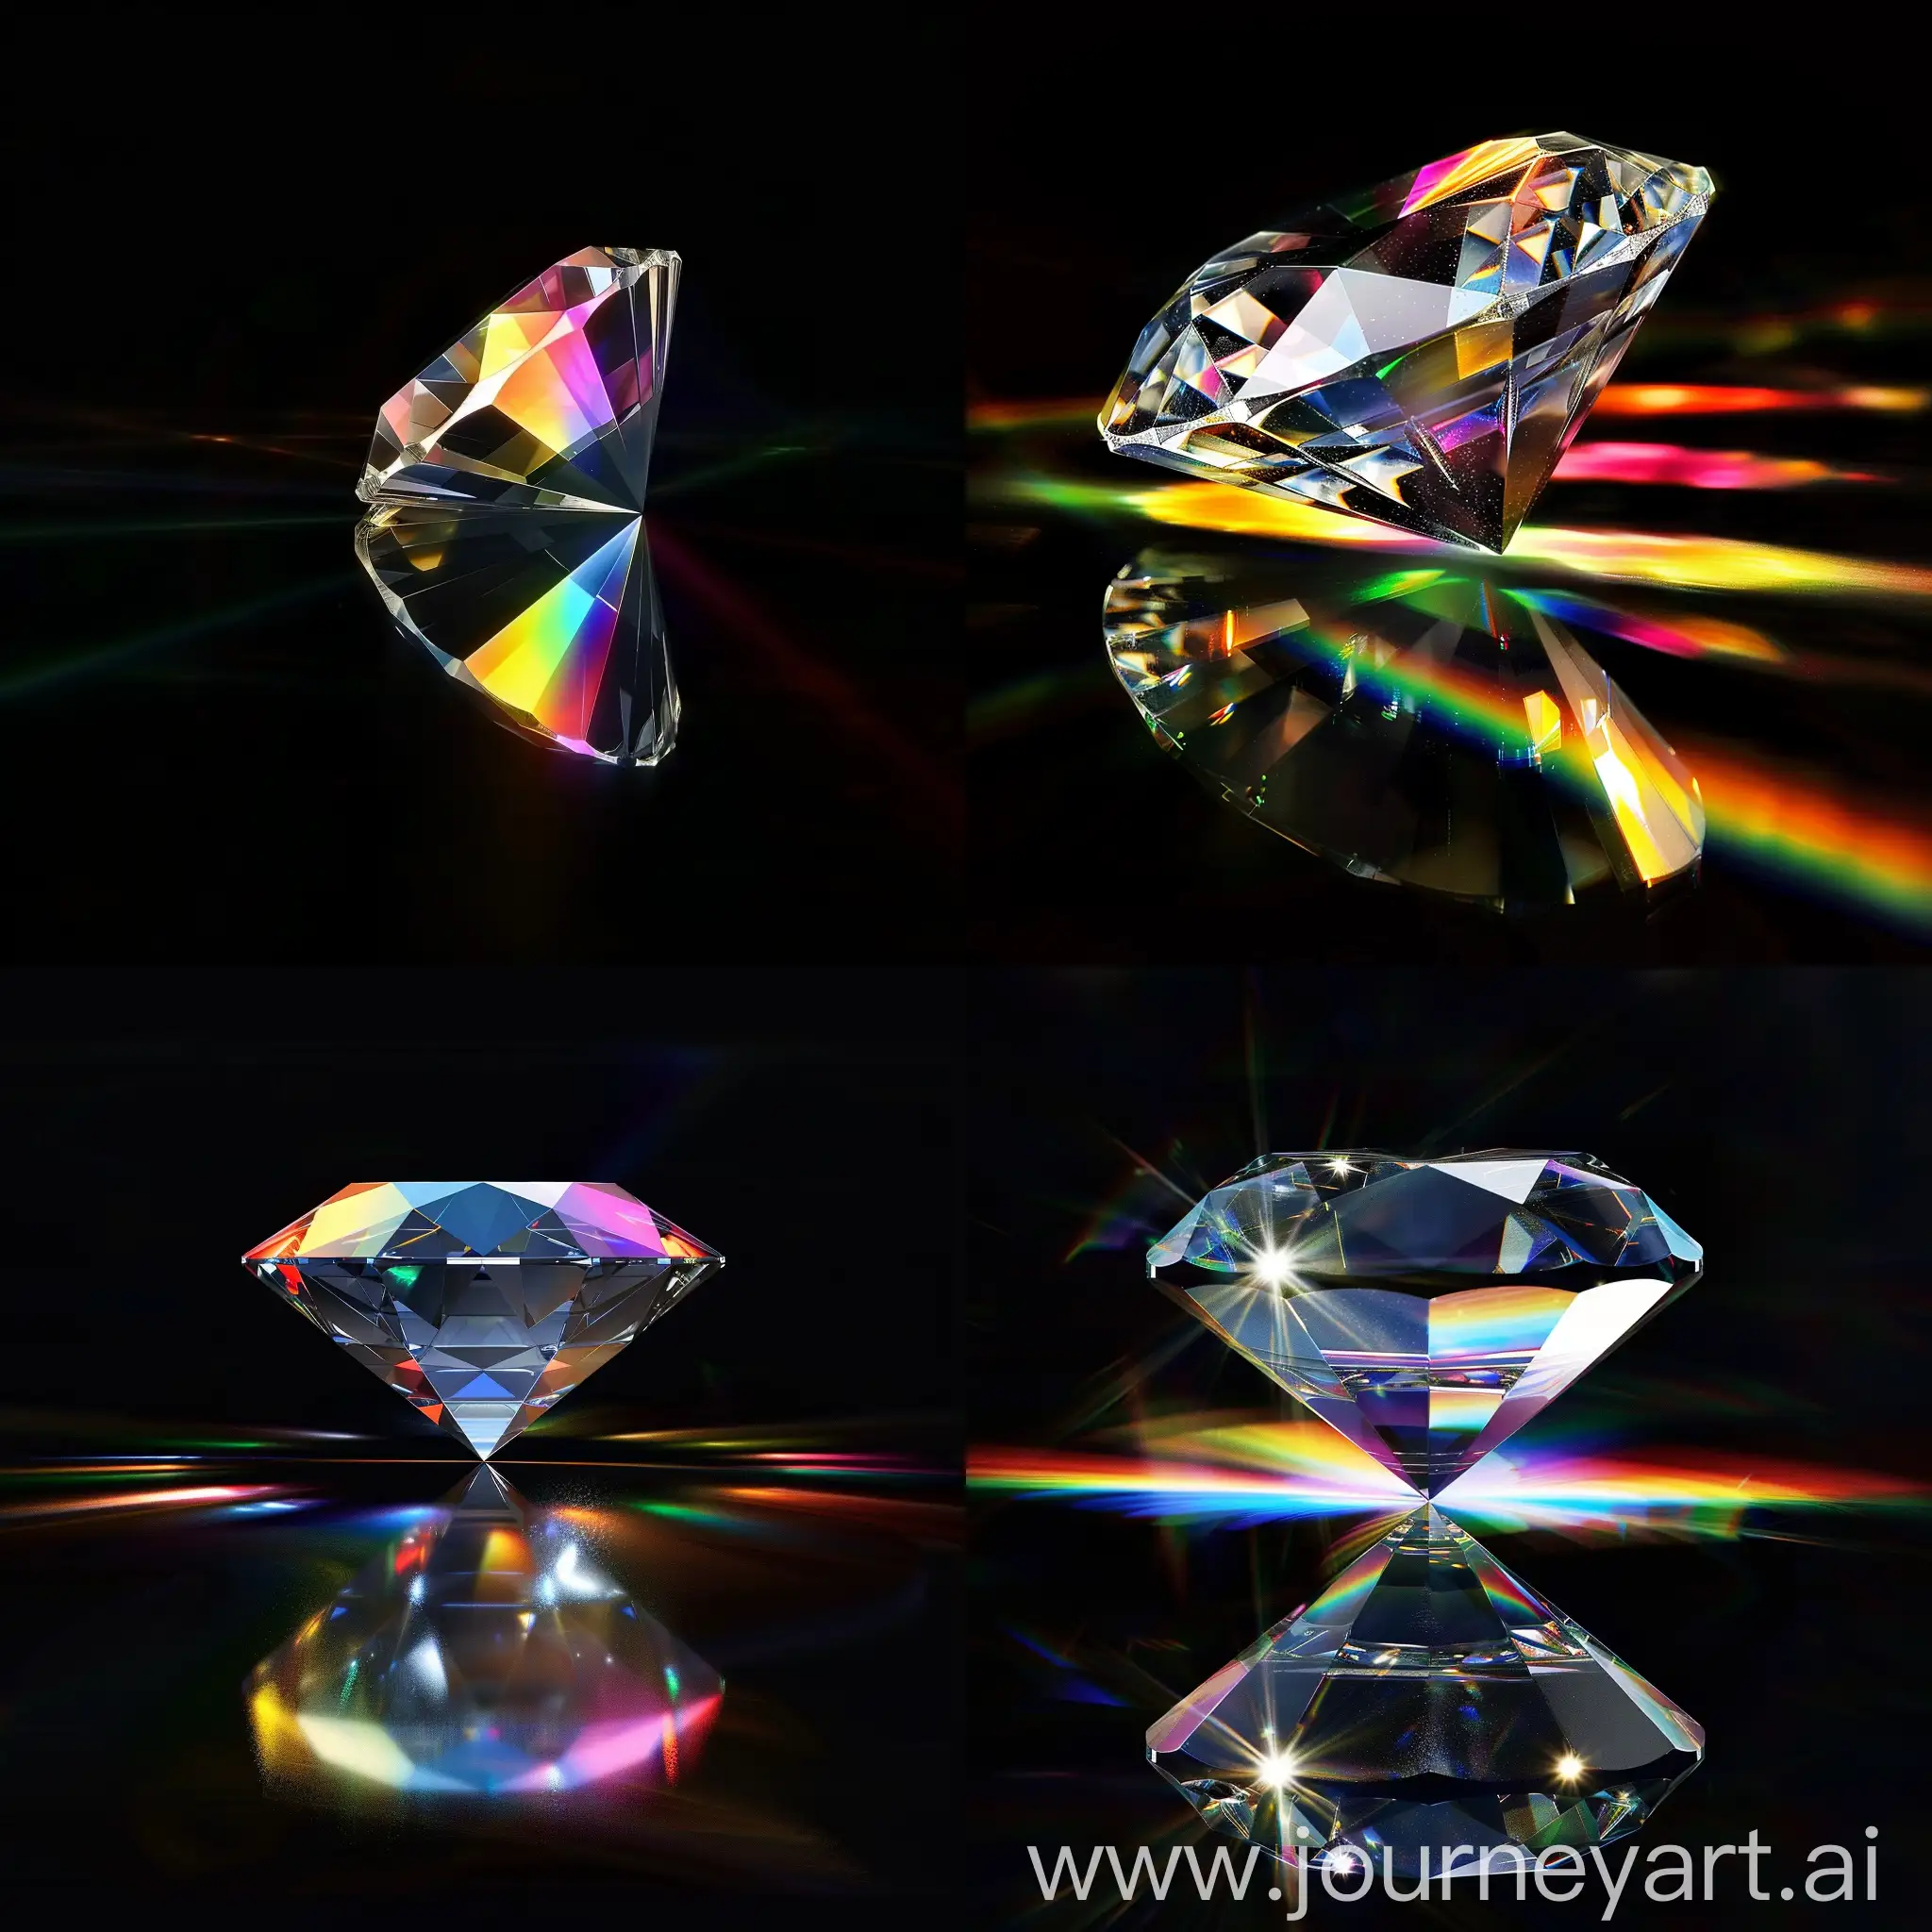 Prismatic-Diamond-Reflection-on-Black-Background